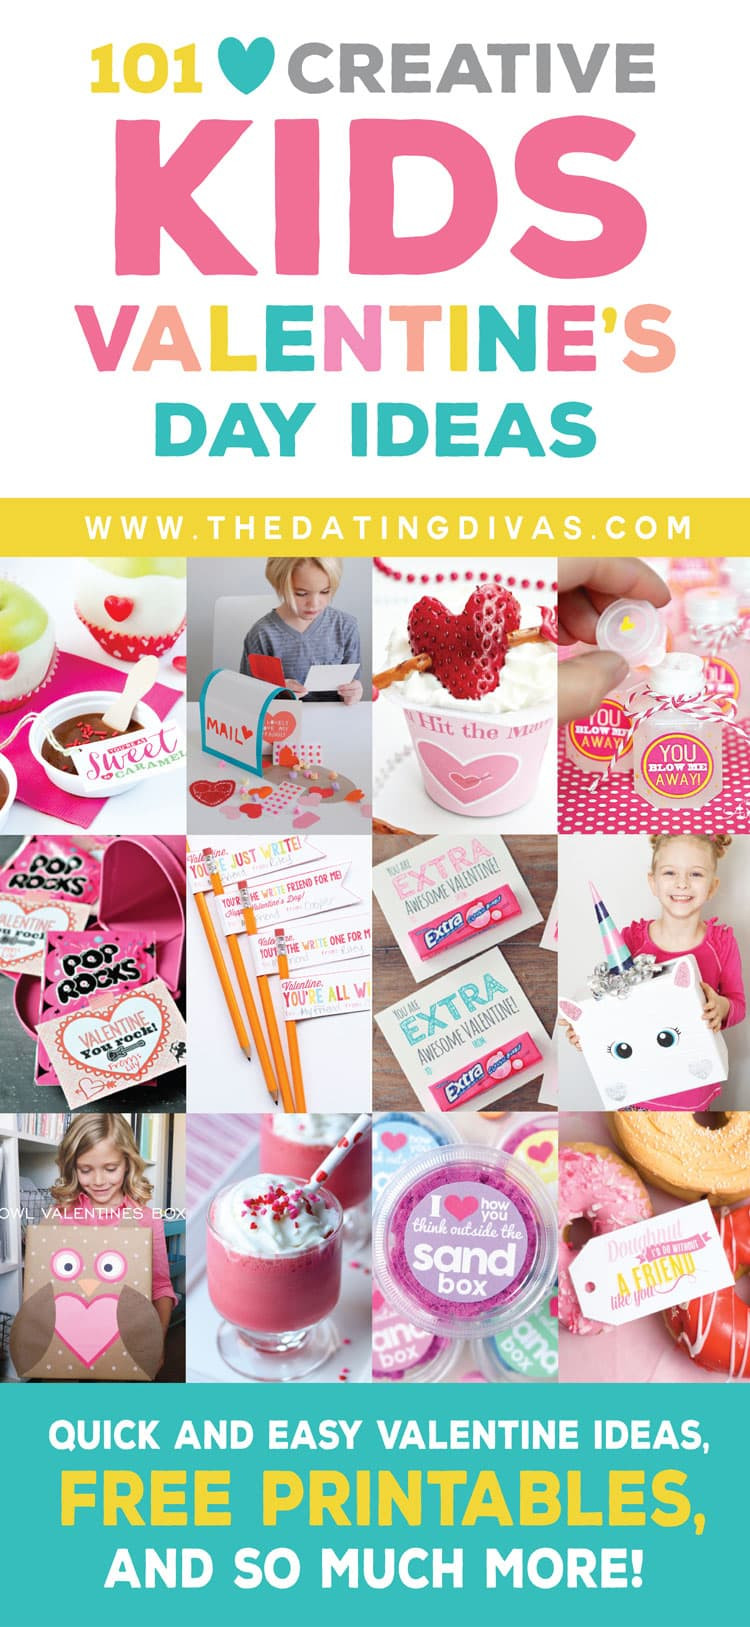 Creatives Ideas For Valentines Day
 100 Kids Valentine s Ideas The Dating Divas